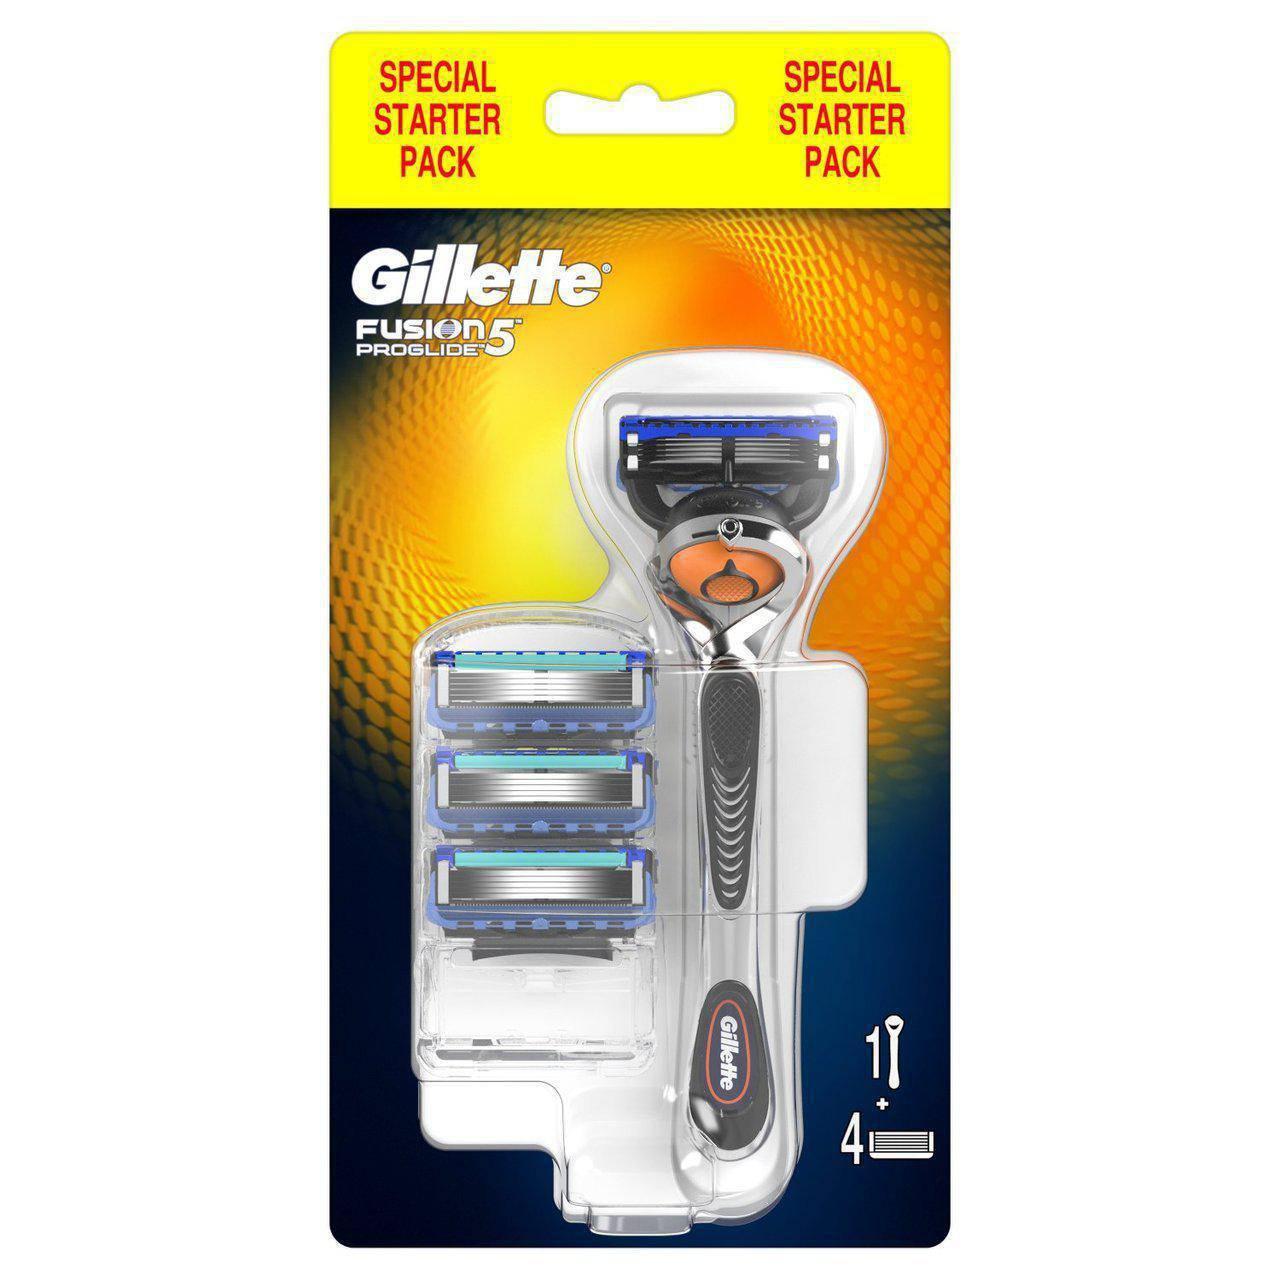 Gillette Fusion5 ProGlide Razor Starter Pack - FlexBall Technology - 4 Blades - Healthxpress.ie